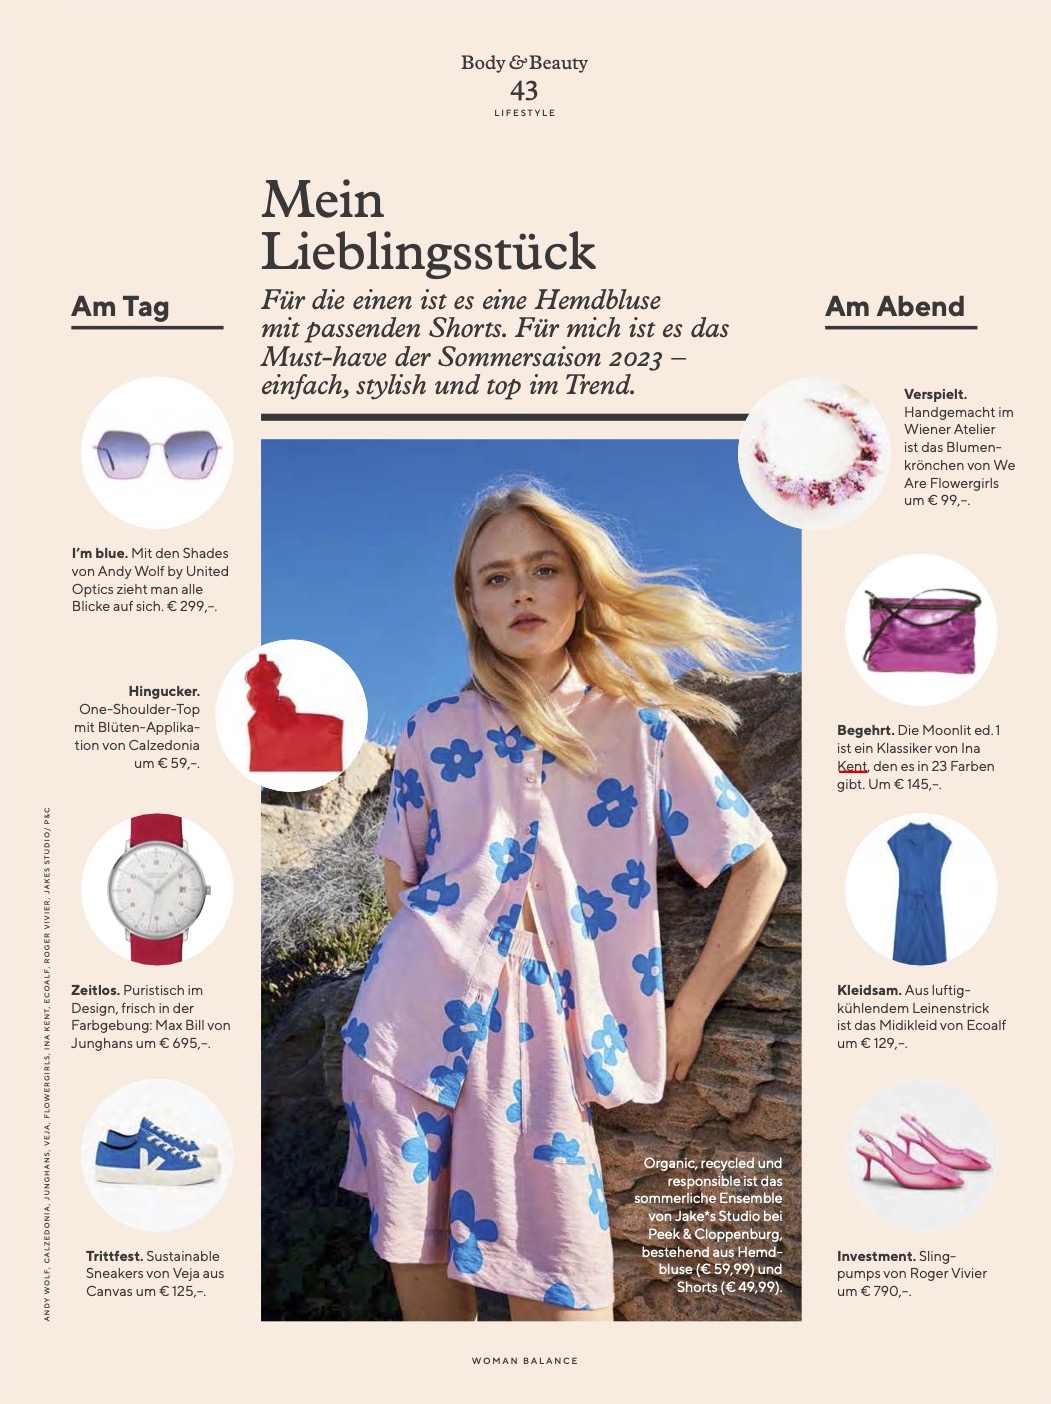 Seite im Magazin Woman Balance "Mein Lieblingsstück" featuring INA KENT MOONLIT ed.1 crackled neon pink